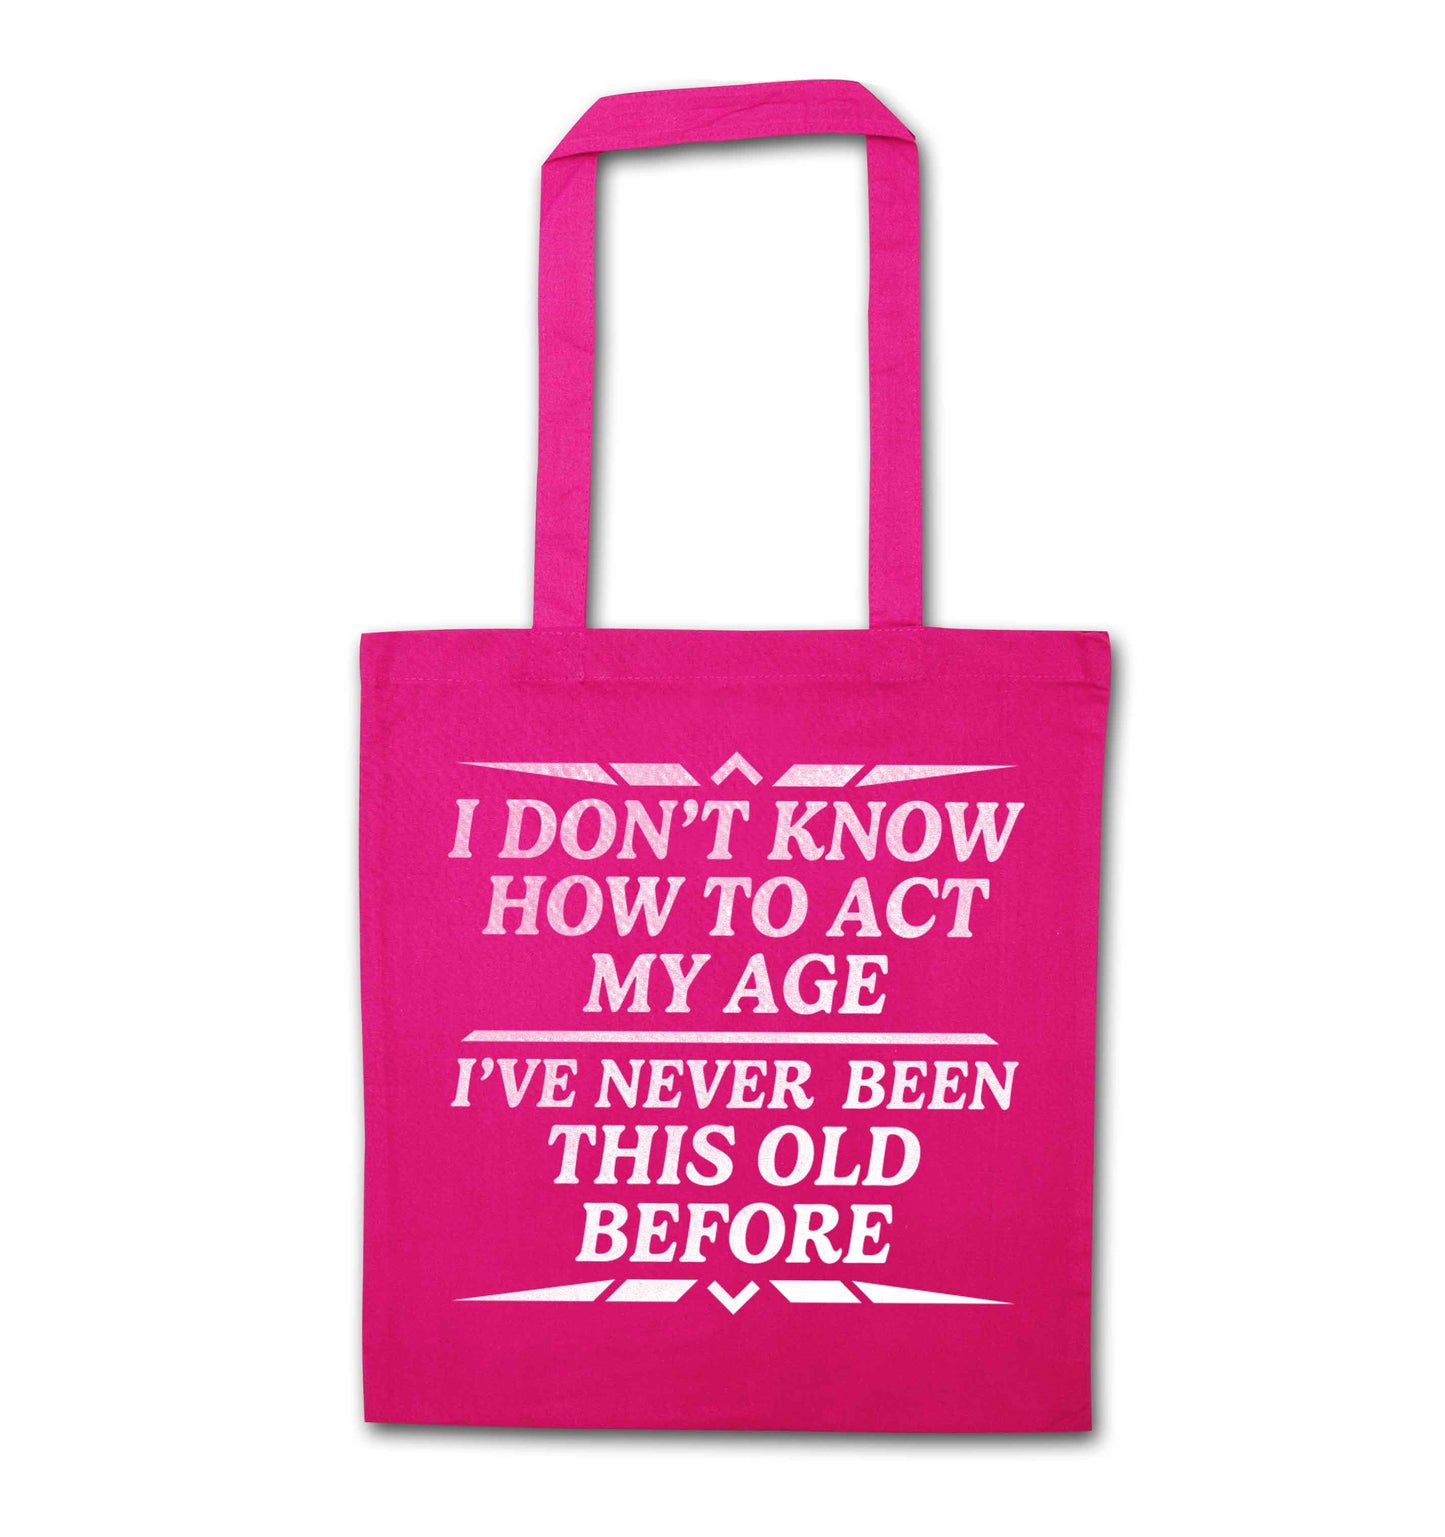 I don't know how to act my age I've never been this old before pink tote bag